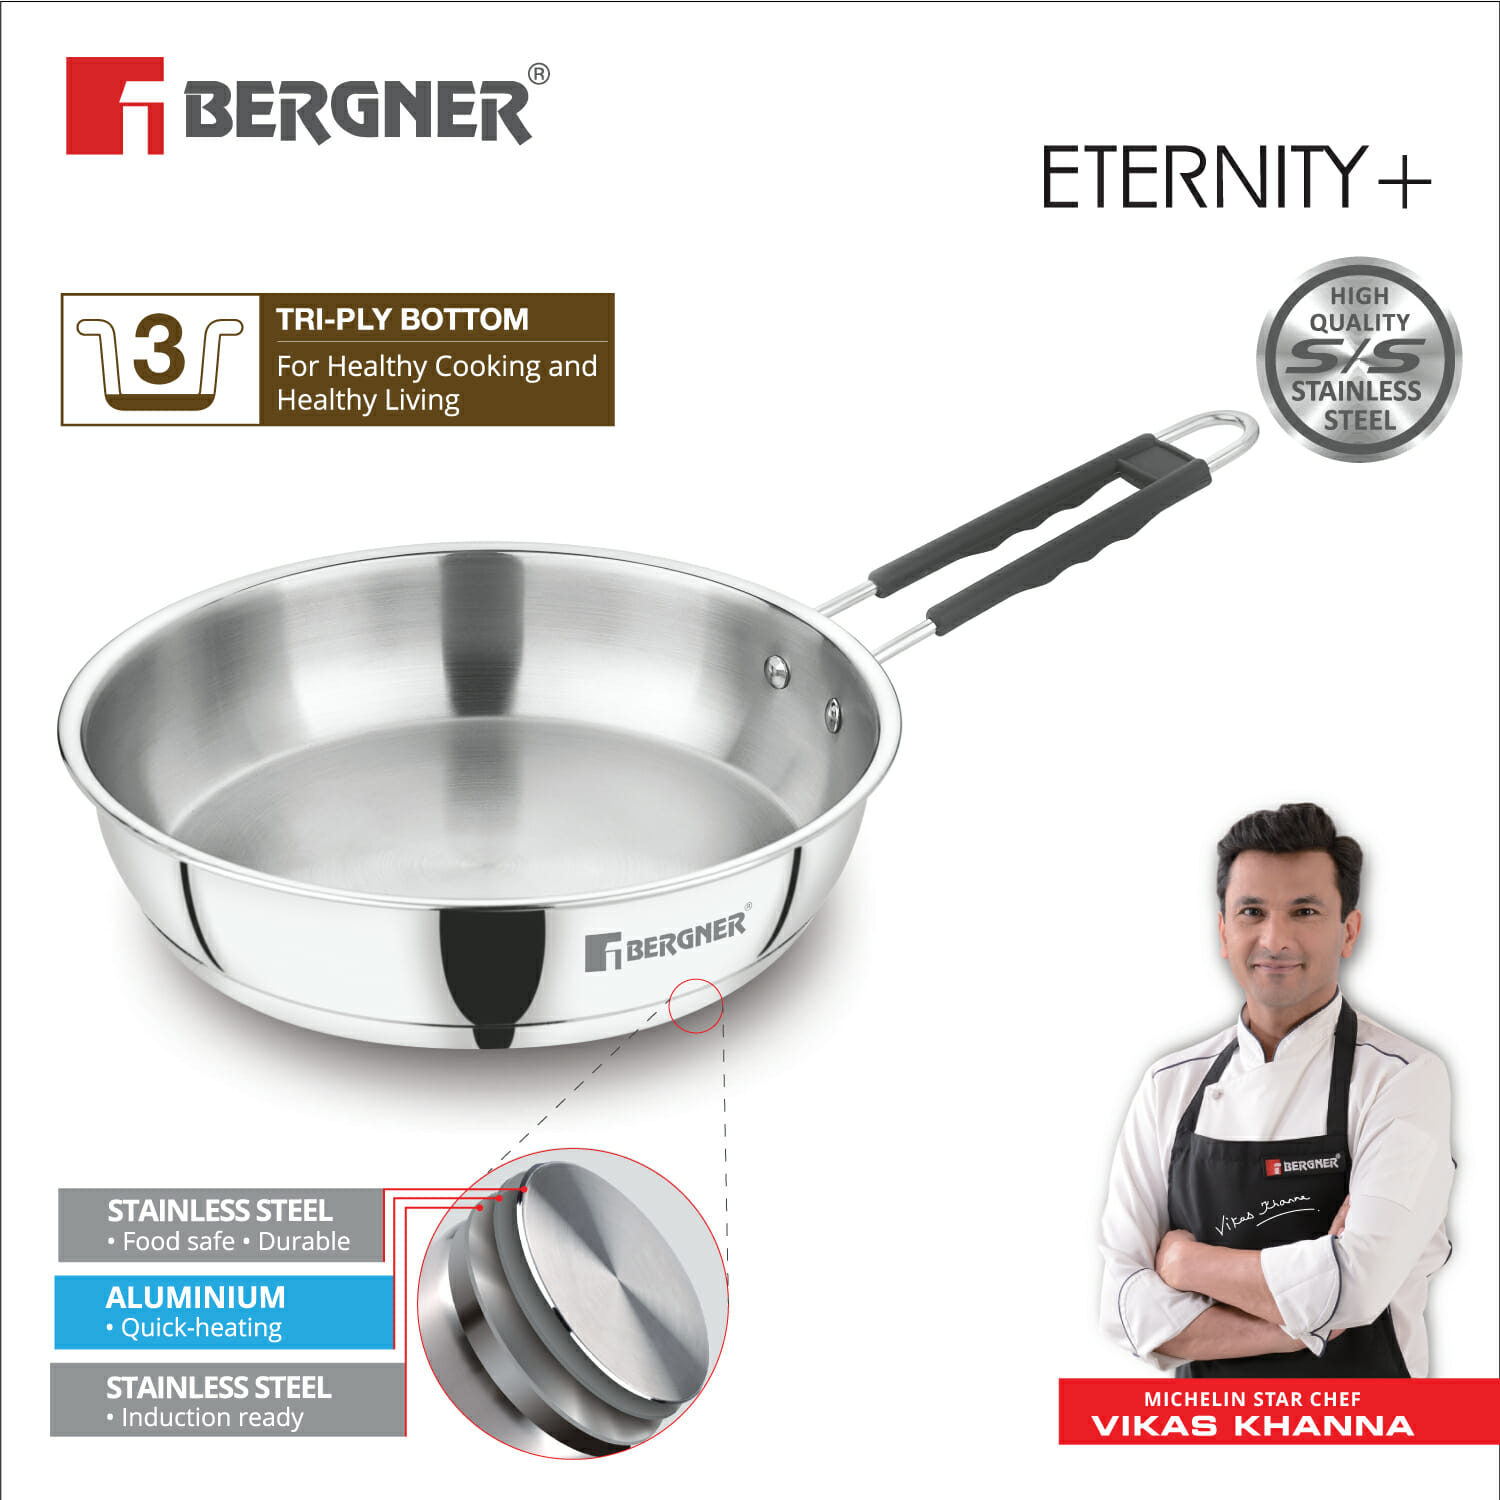 Bergner Eternity Stainless Steel Silver 24cm, 1.45 Ltr Frypan